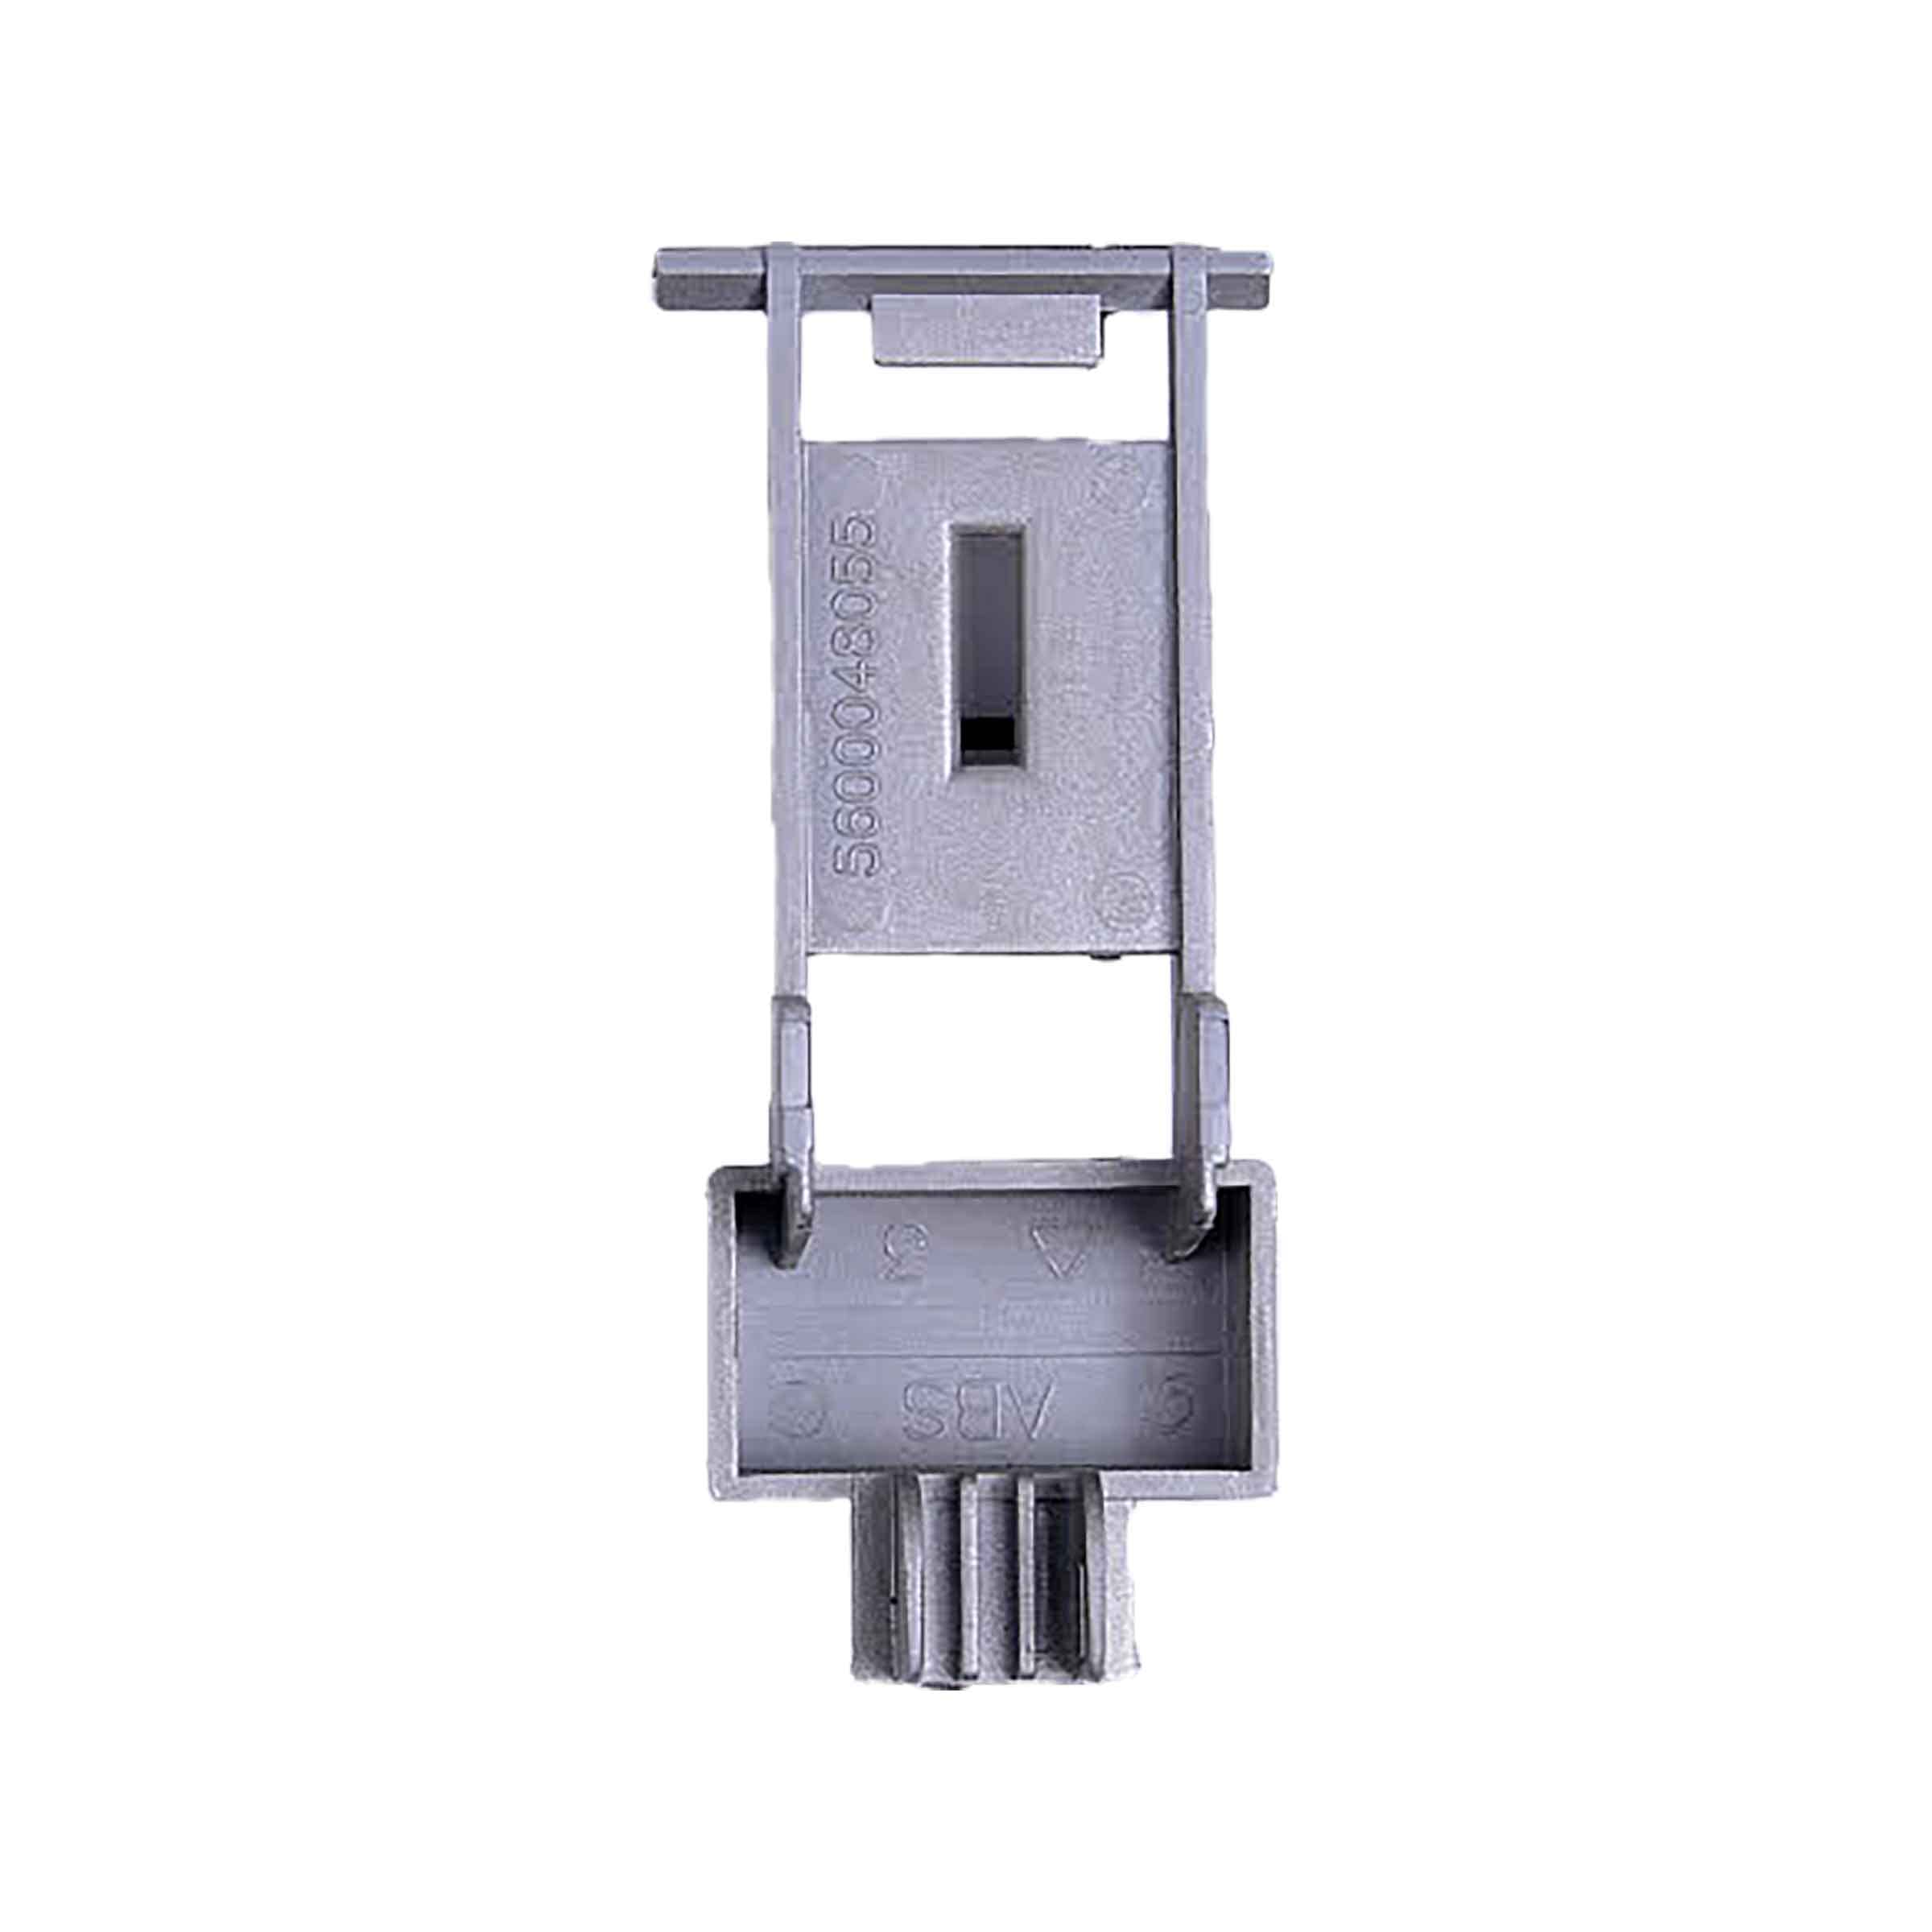 Bosch Dishwasher Start Key – Silver. Part #00425565